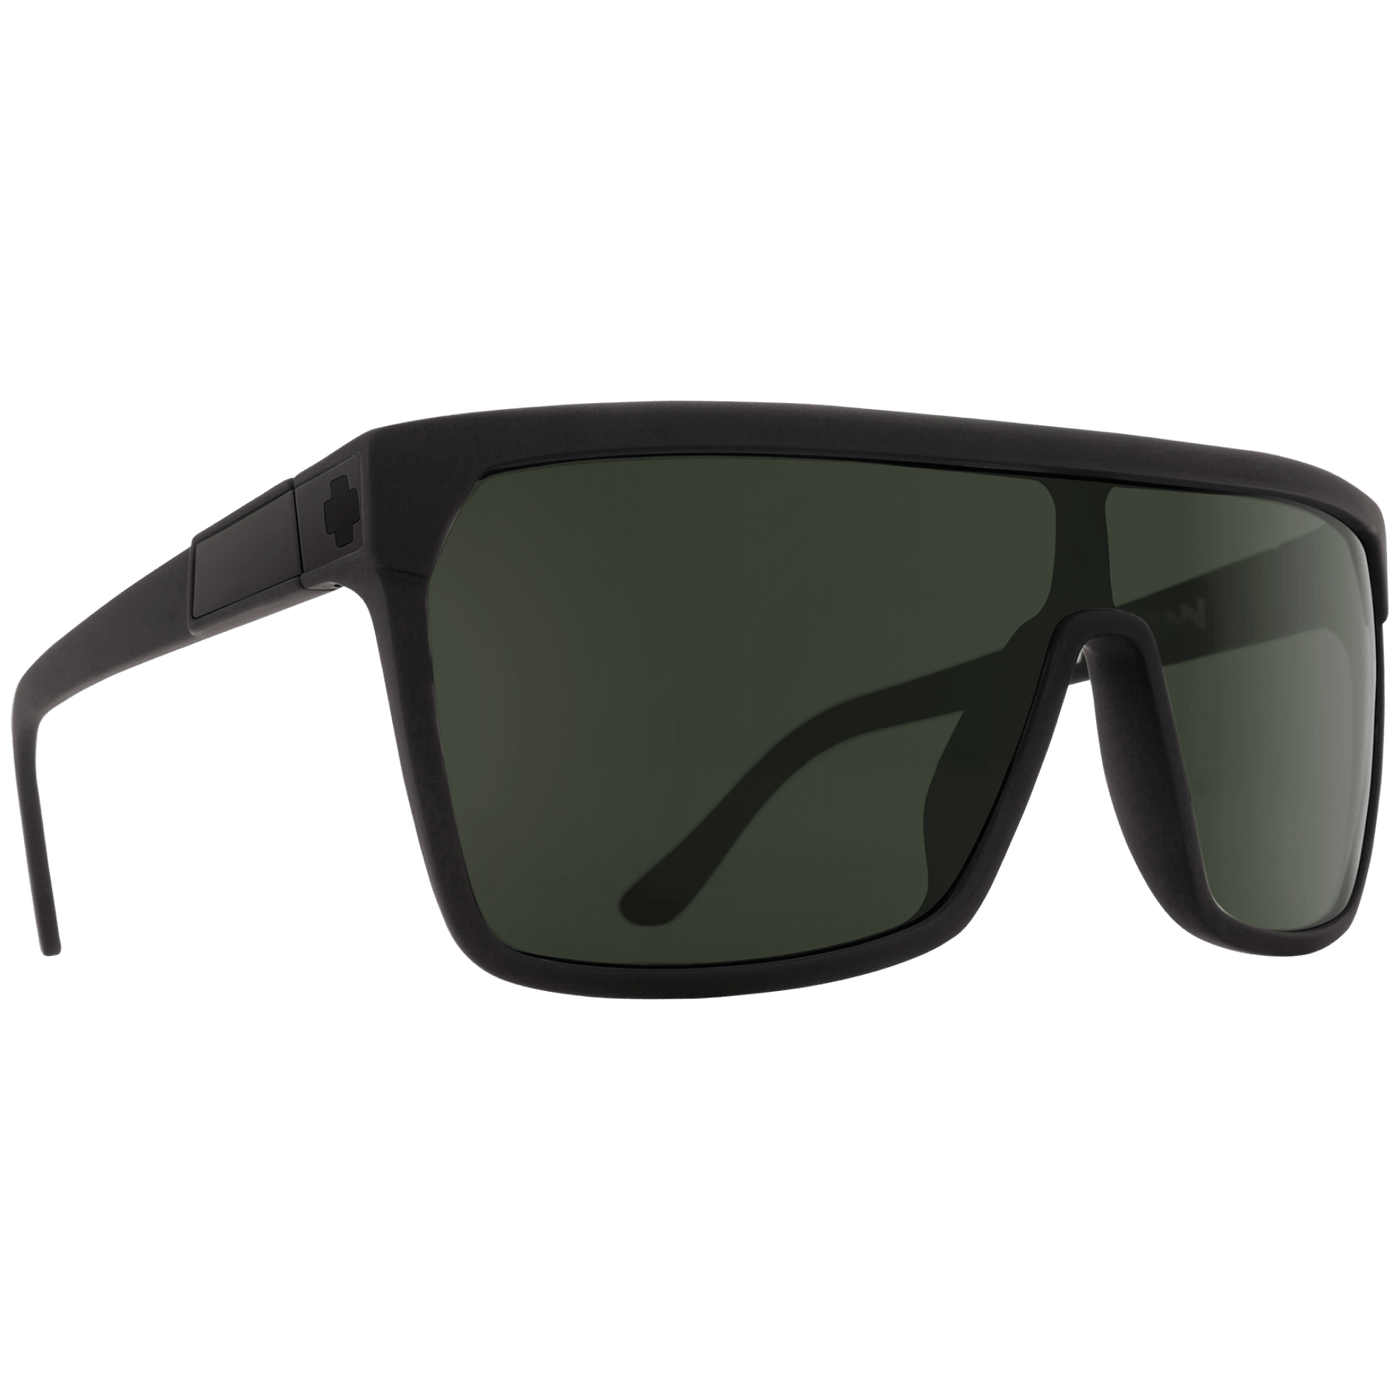 SPY Flynn Sunglasses, Happy Lens, Soft Matte - Gray/Green 8Lines Shop - Fast Shipping